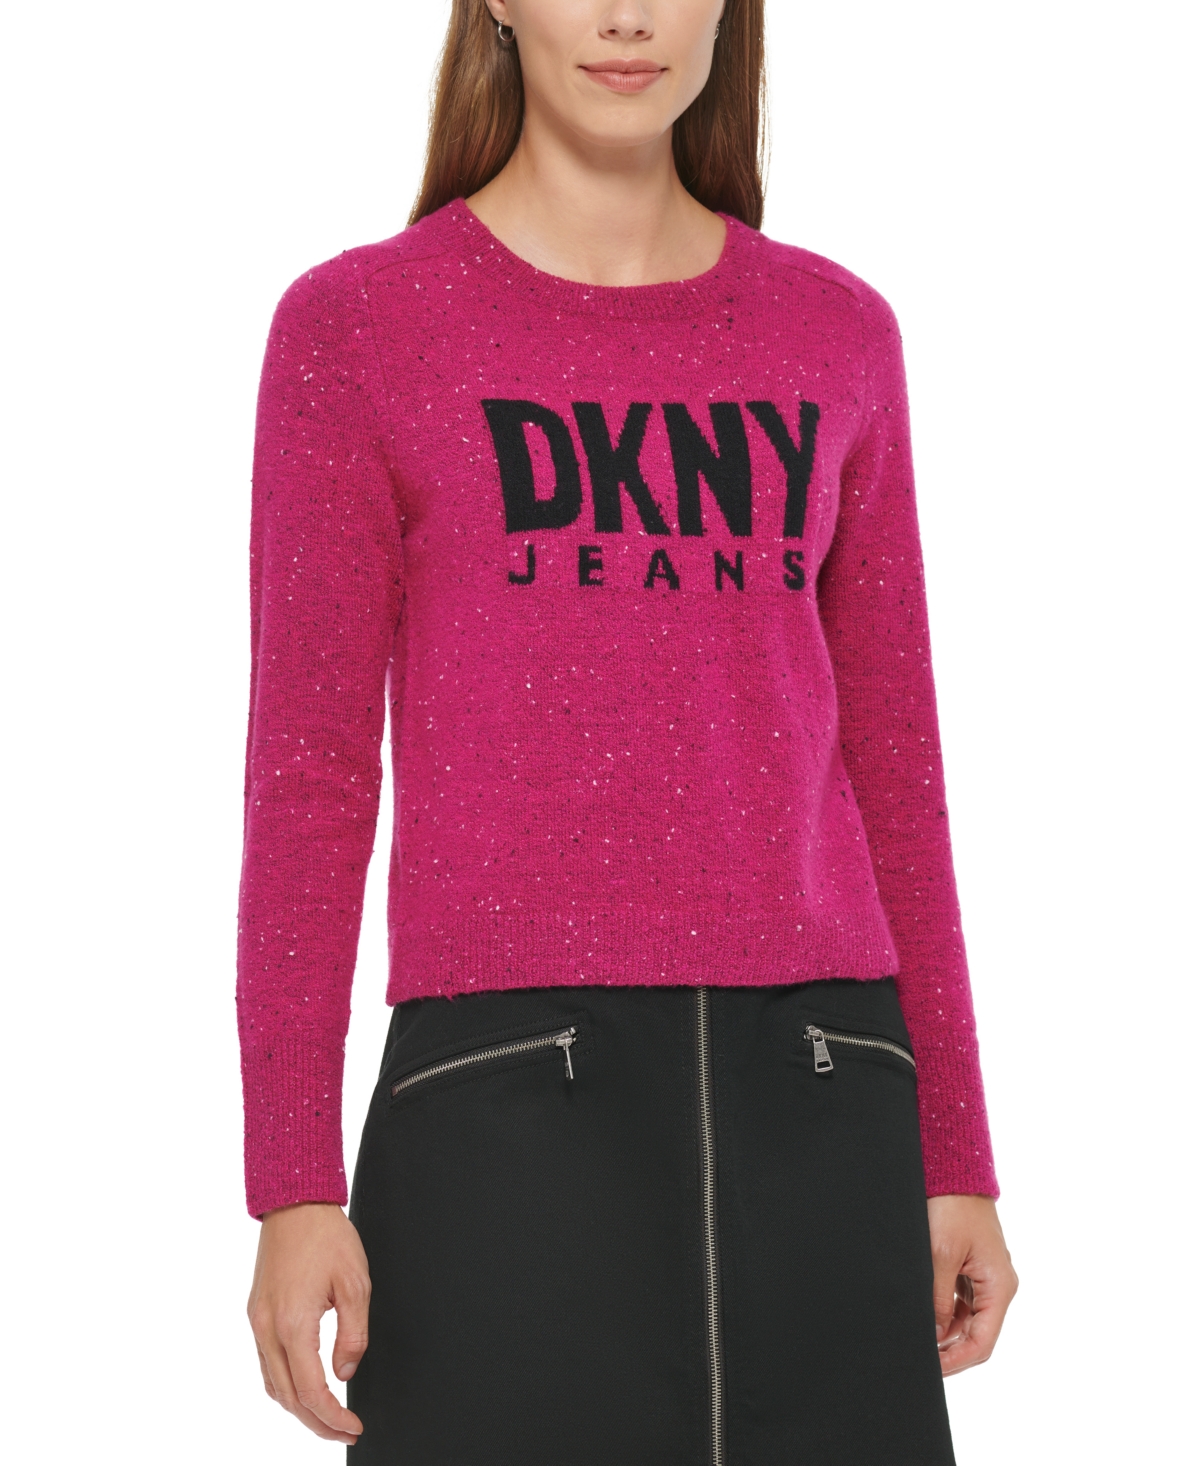 Dkny Jeans Women's Long-Sleeve Logo Crewneck Sweater